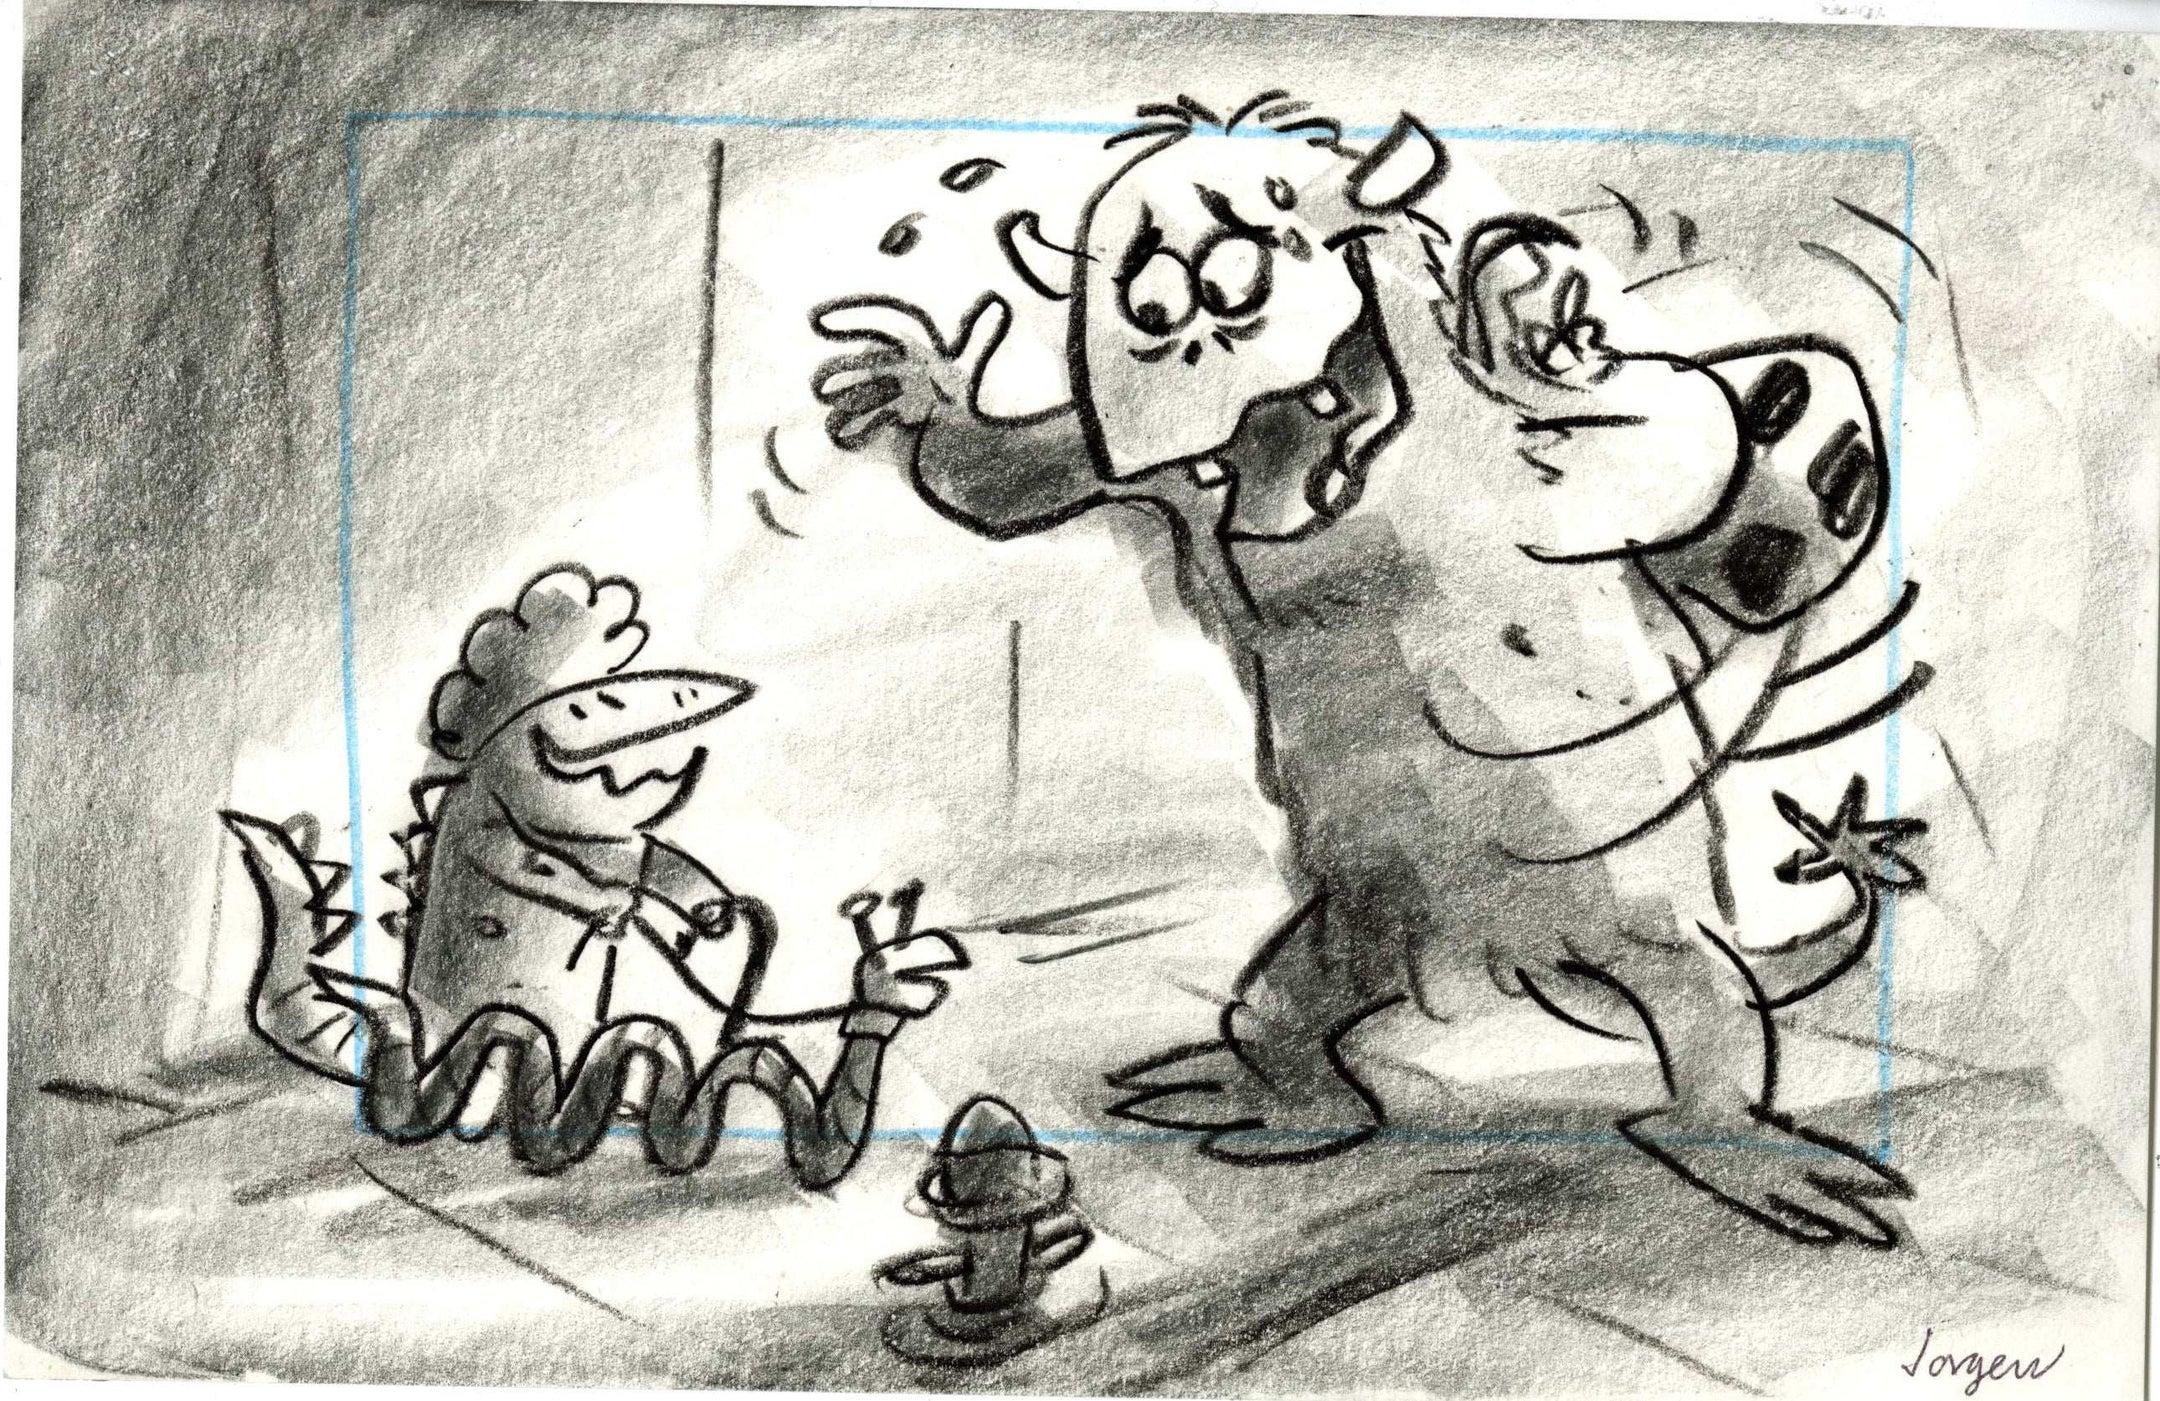 Monsters Inc., Original Storyboard: John Sullivan